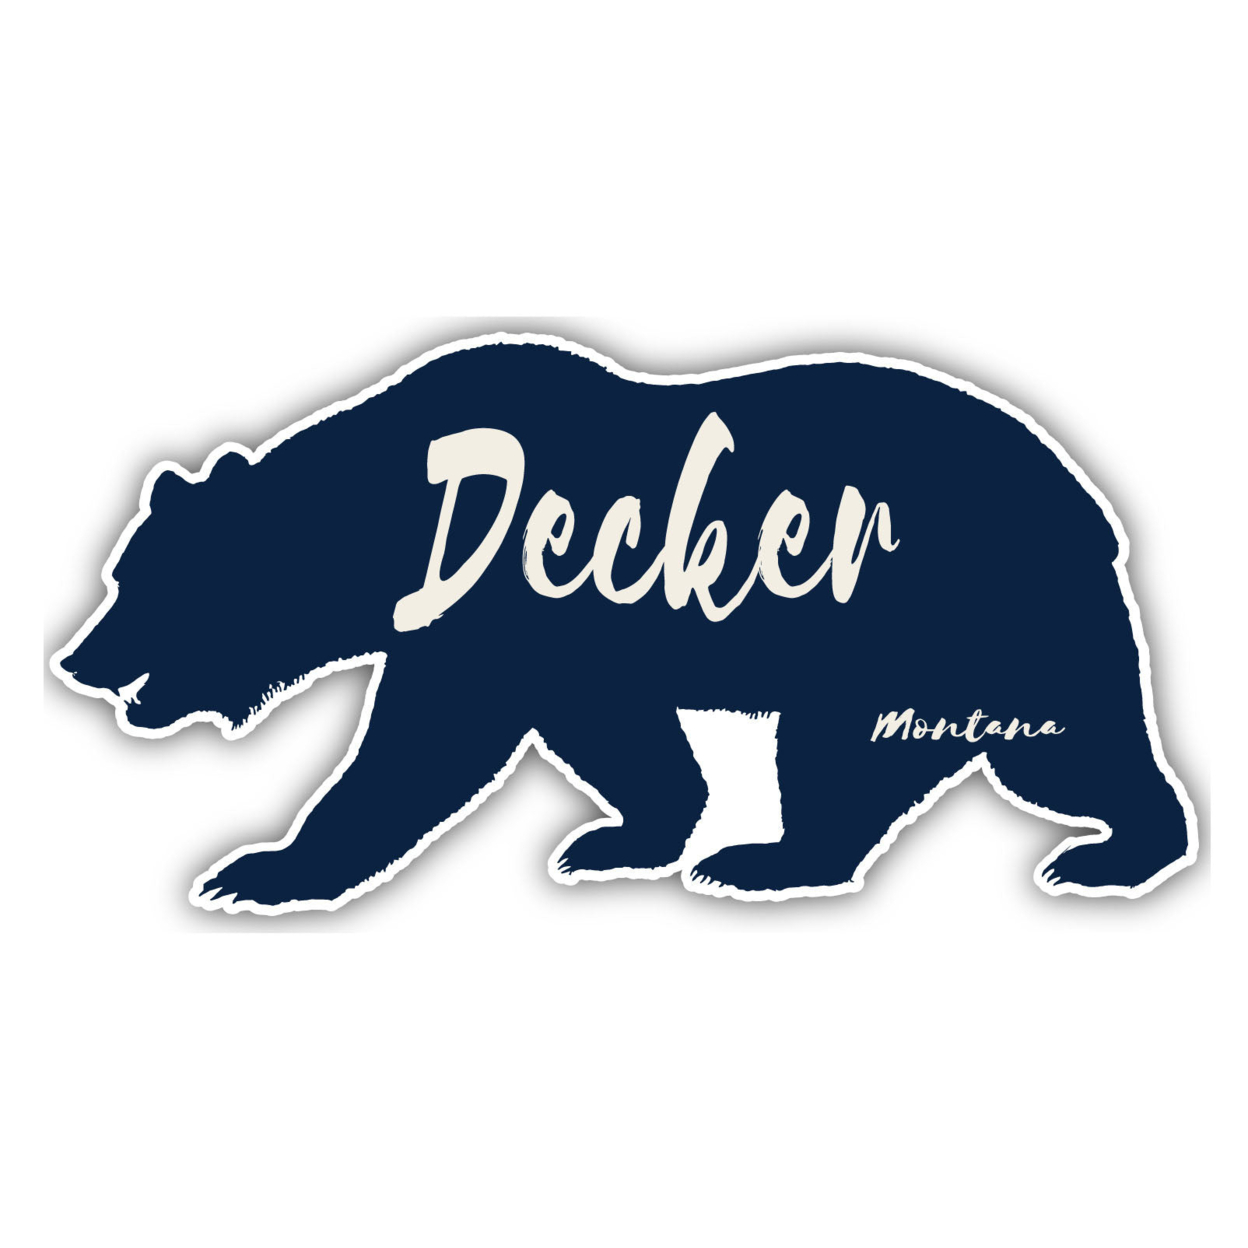 Decker Montana Souvenir Decorative Stickers (Choose Theme And Size) - 4-Pack, 6-Inch, Bear